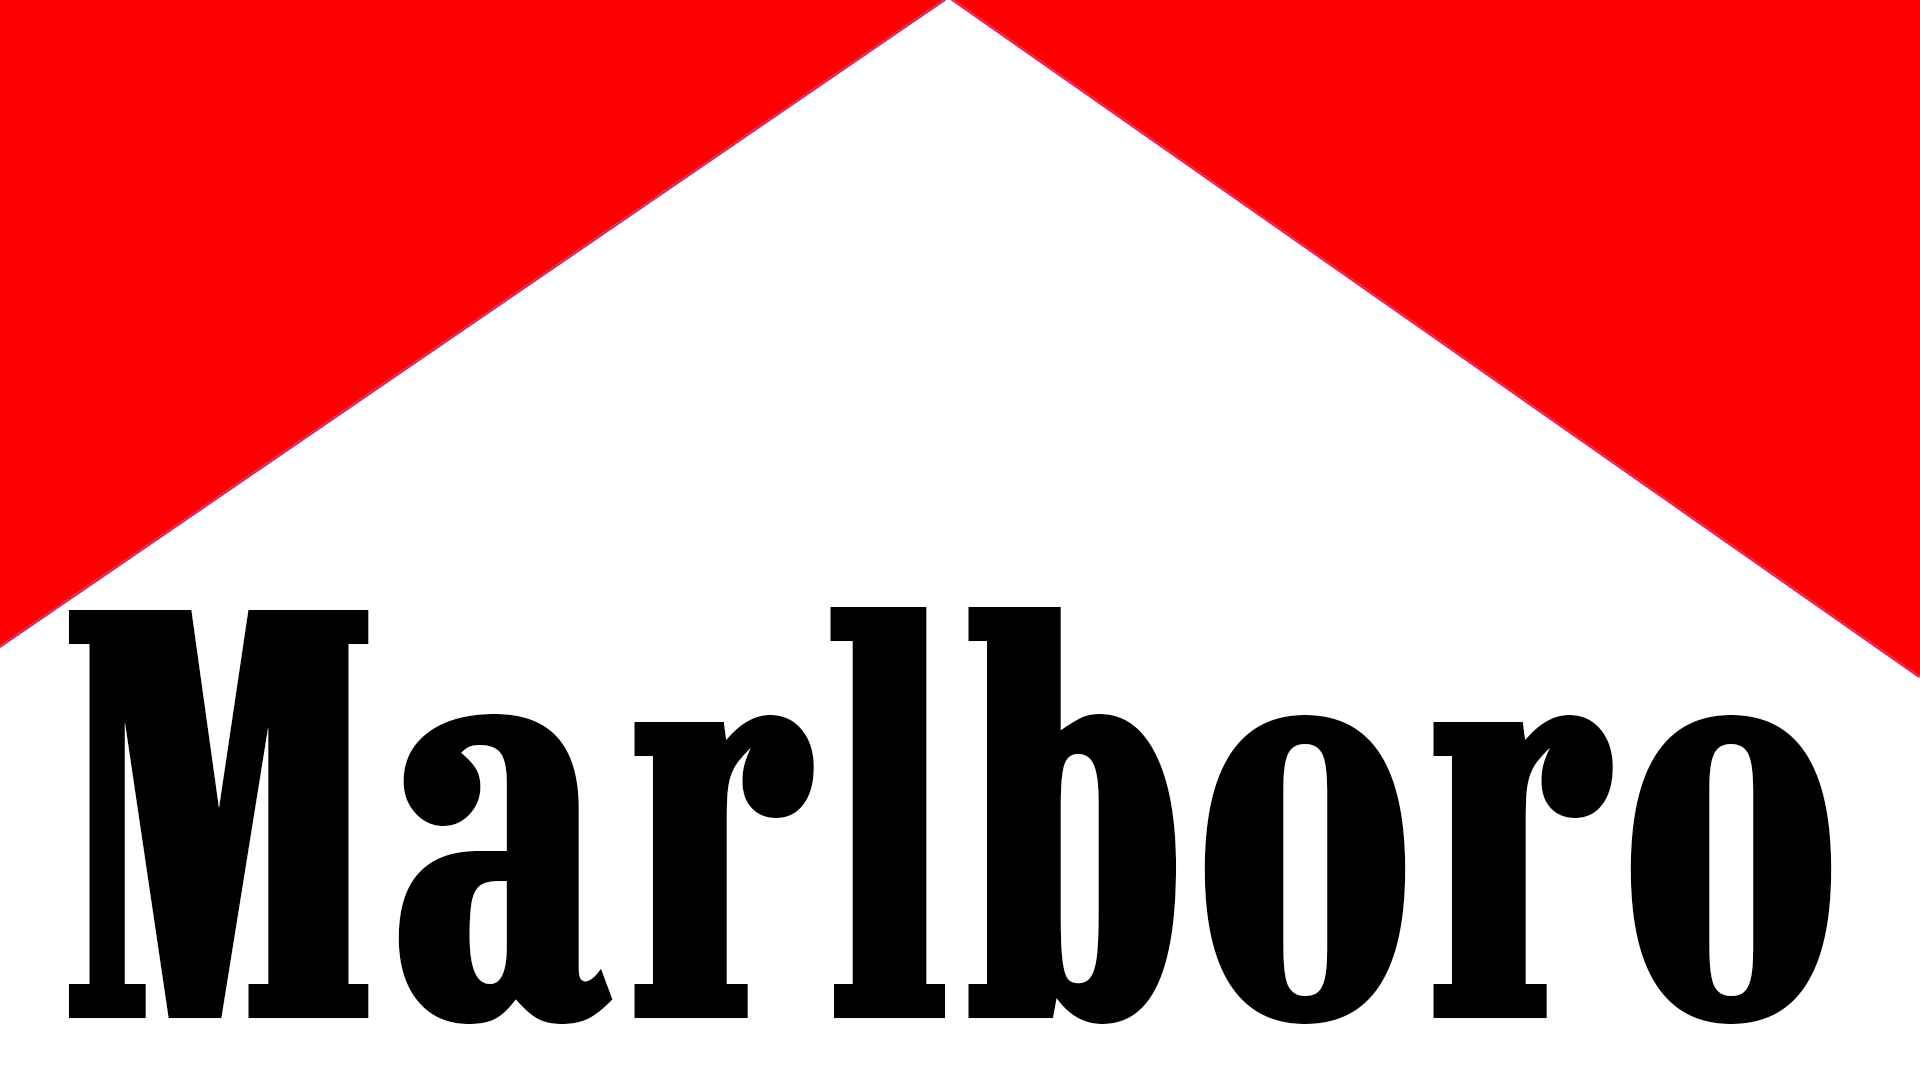 Maarlboro Logo - Marlboro Logo PNG Transparent Marlboro Logo.PNG Images. | PlusPNG